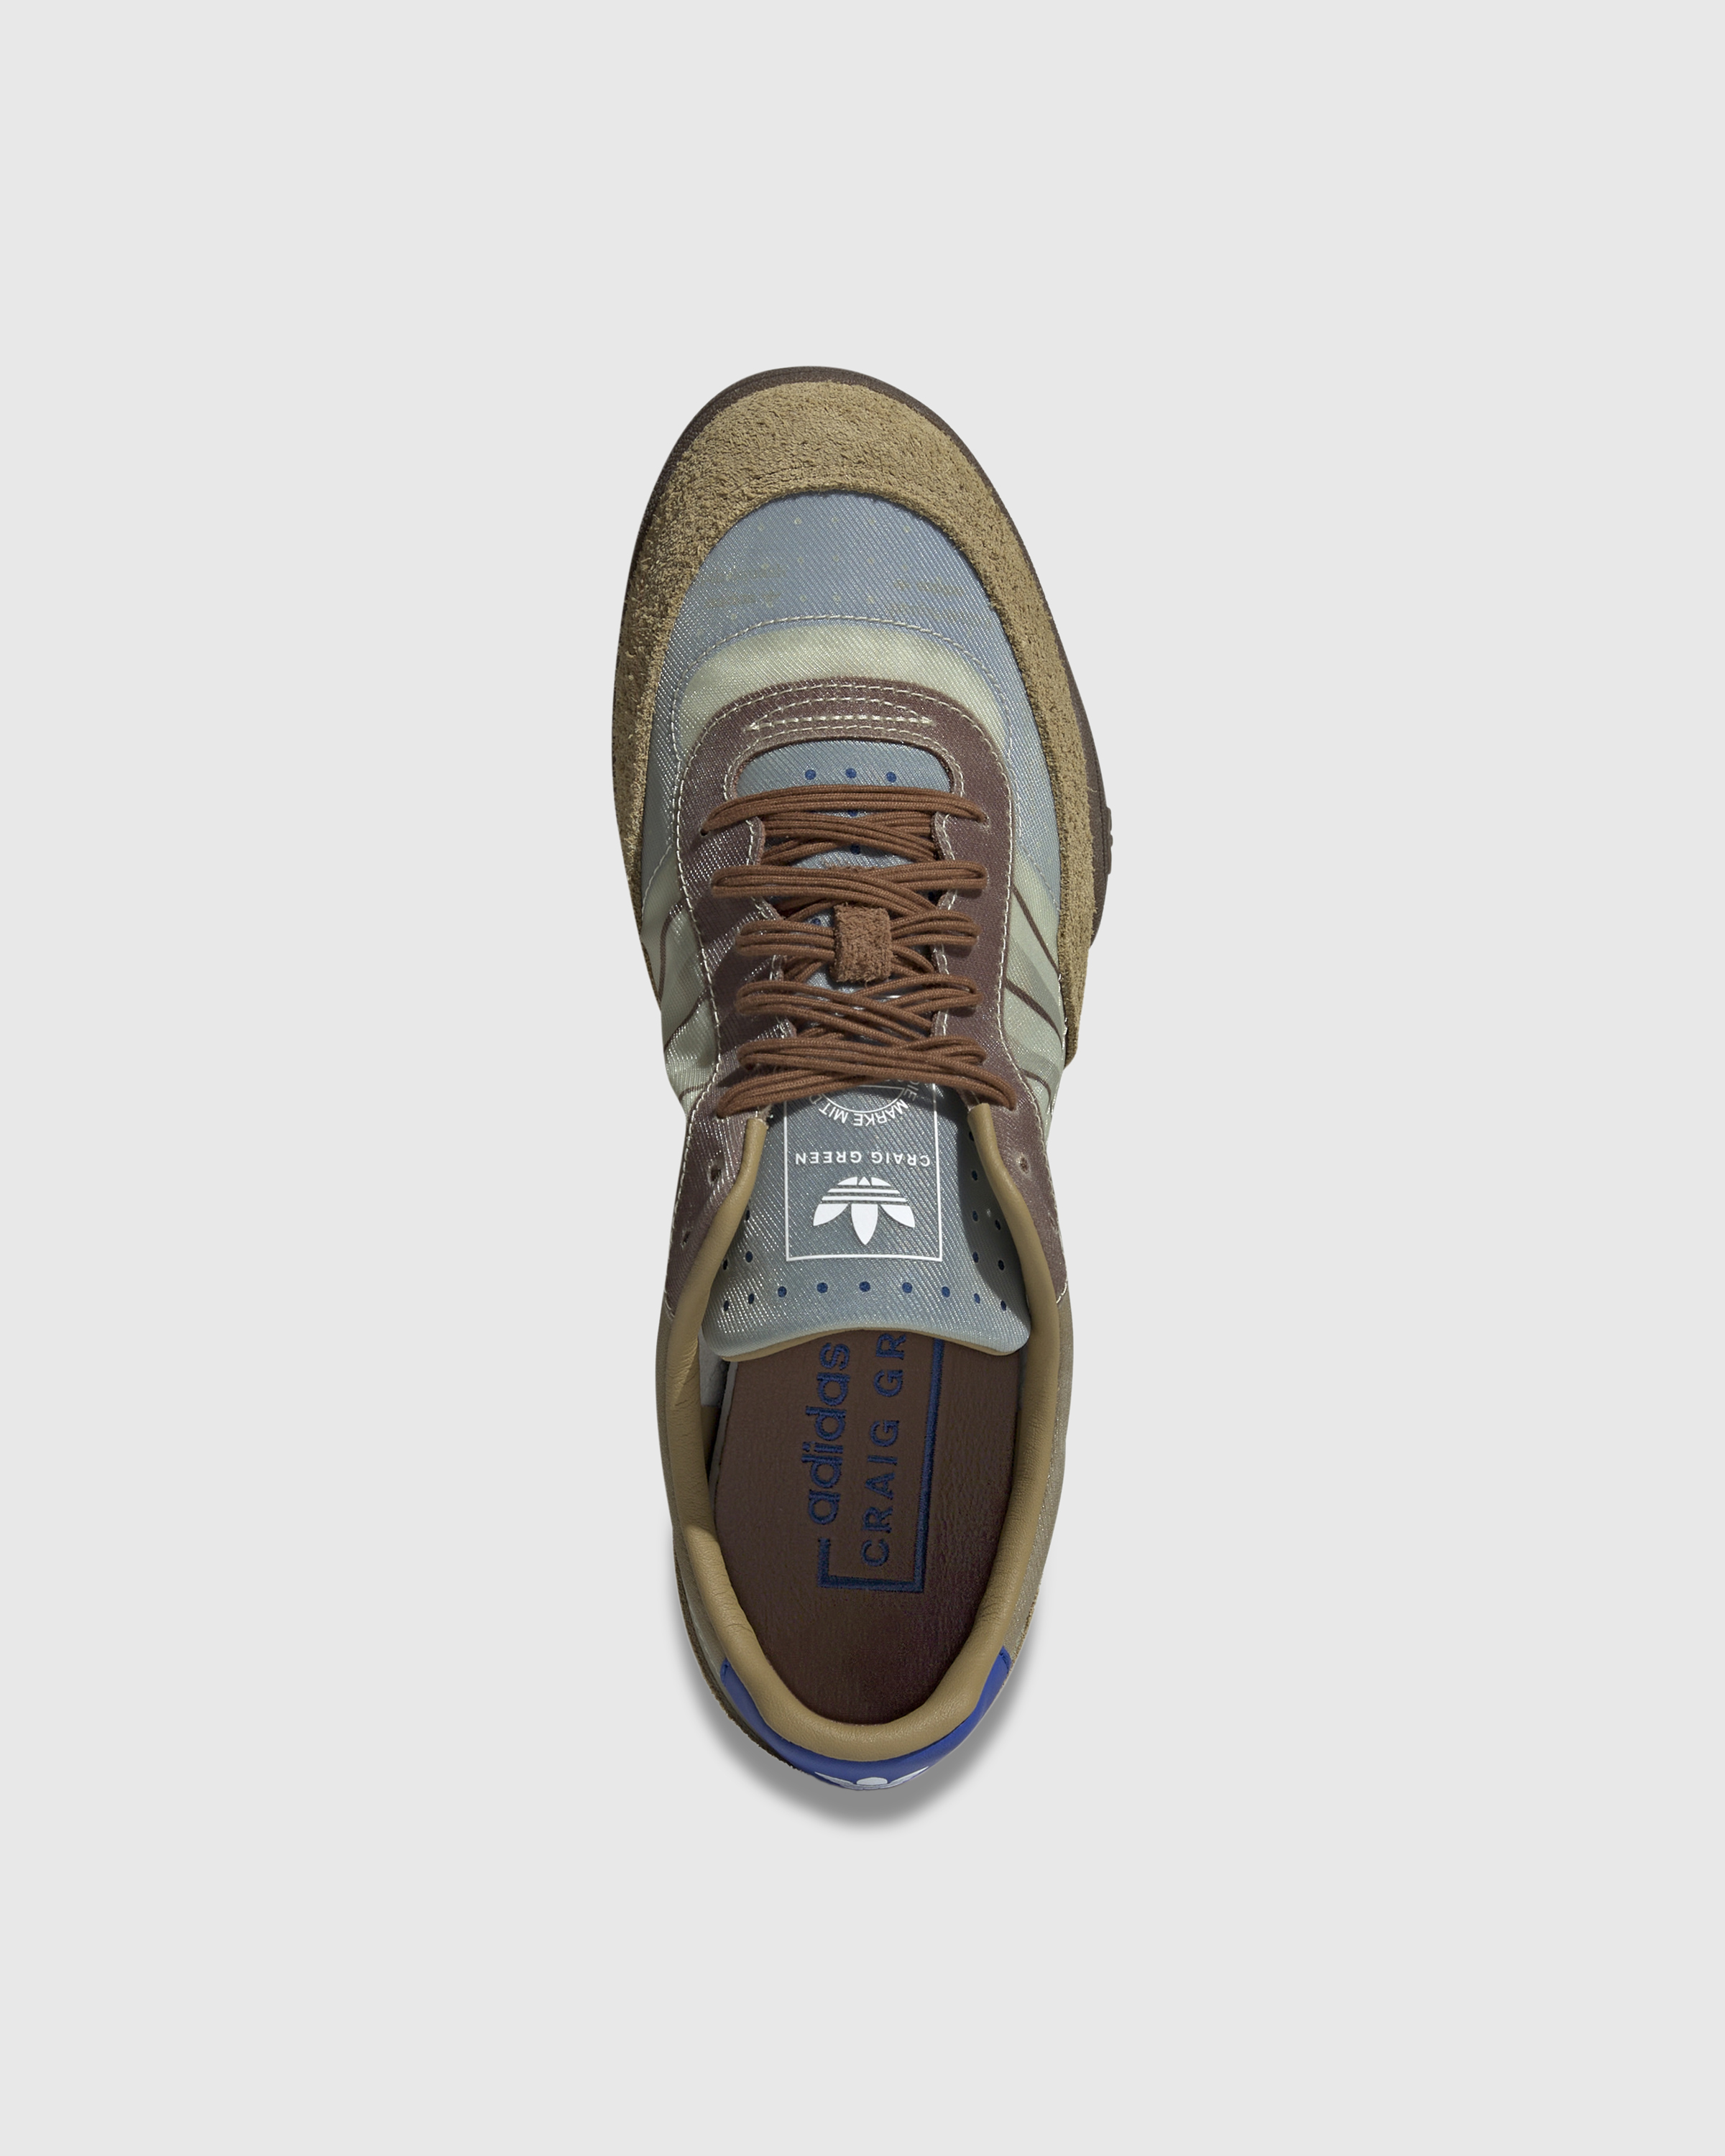 Adidas x Craig Green – Squash Polta Akh Dark Brown/Core Black/Blue - Low Top Sneakers - Brown - Image 5